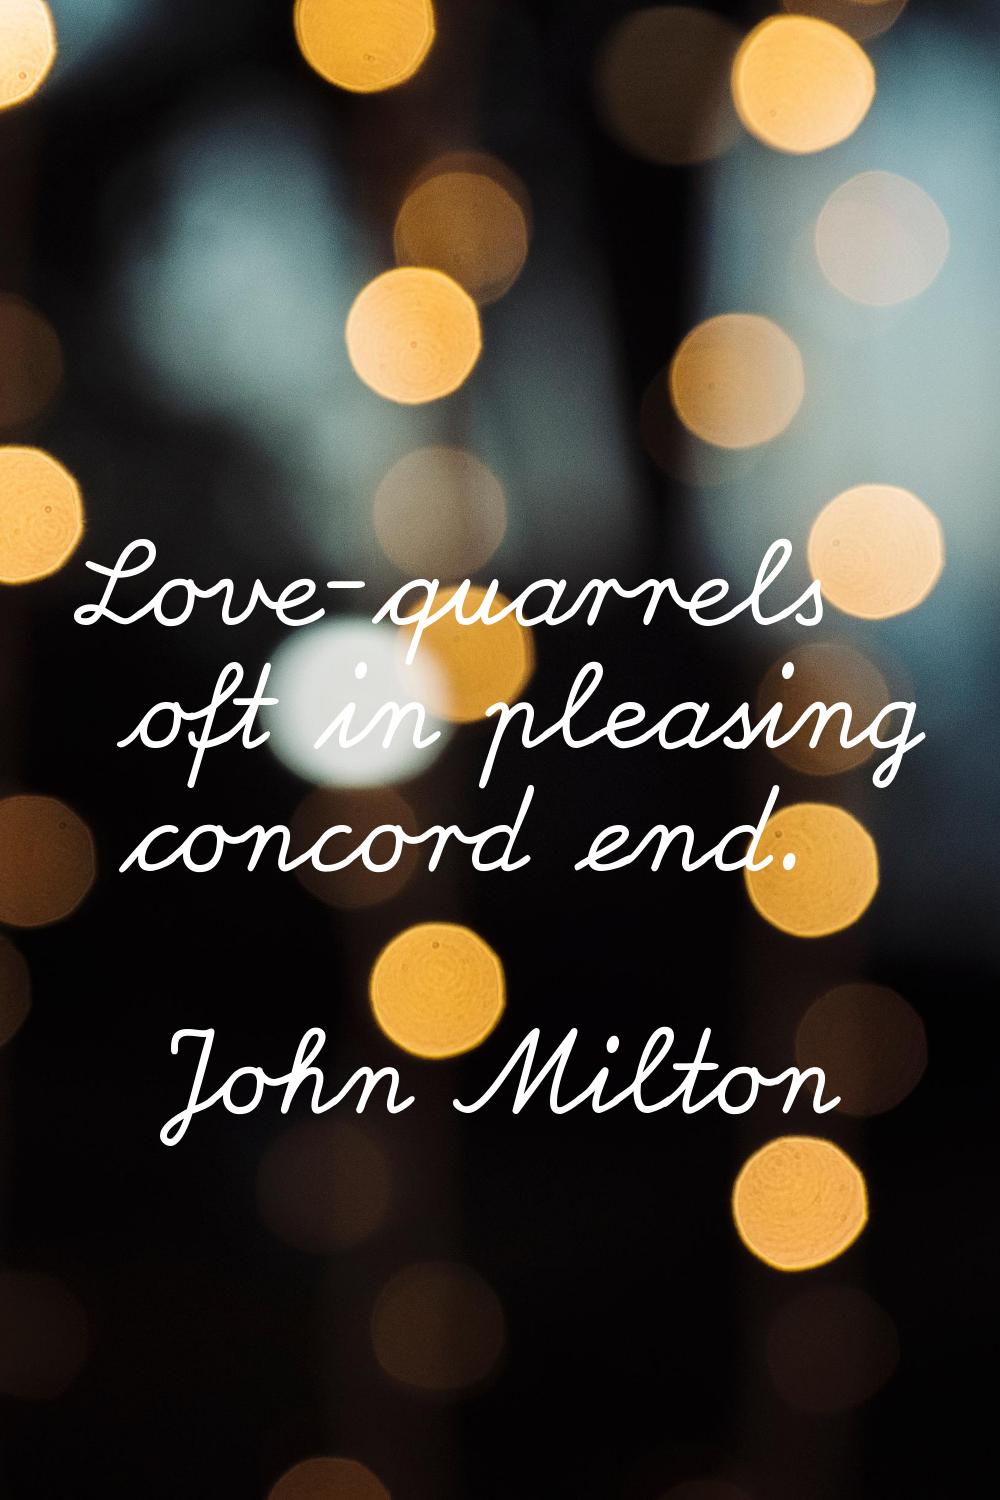 Love-quarrels oft in pleasing concord end.